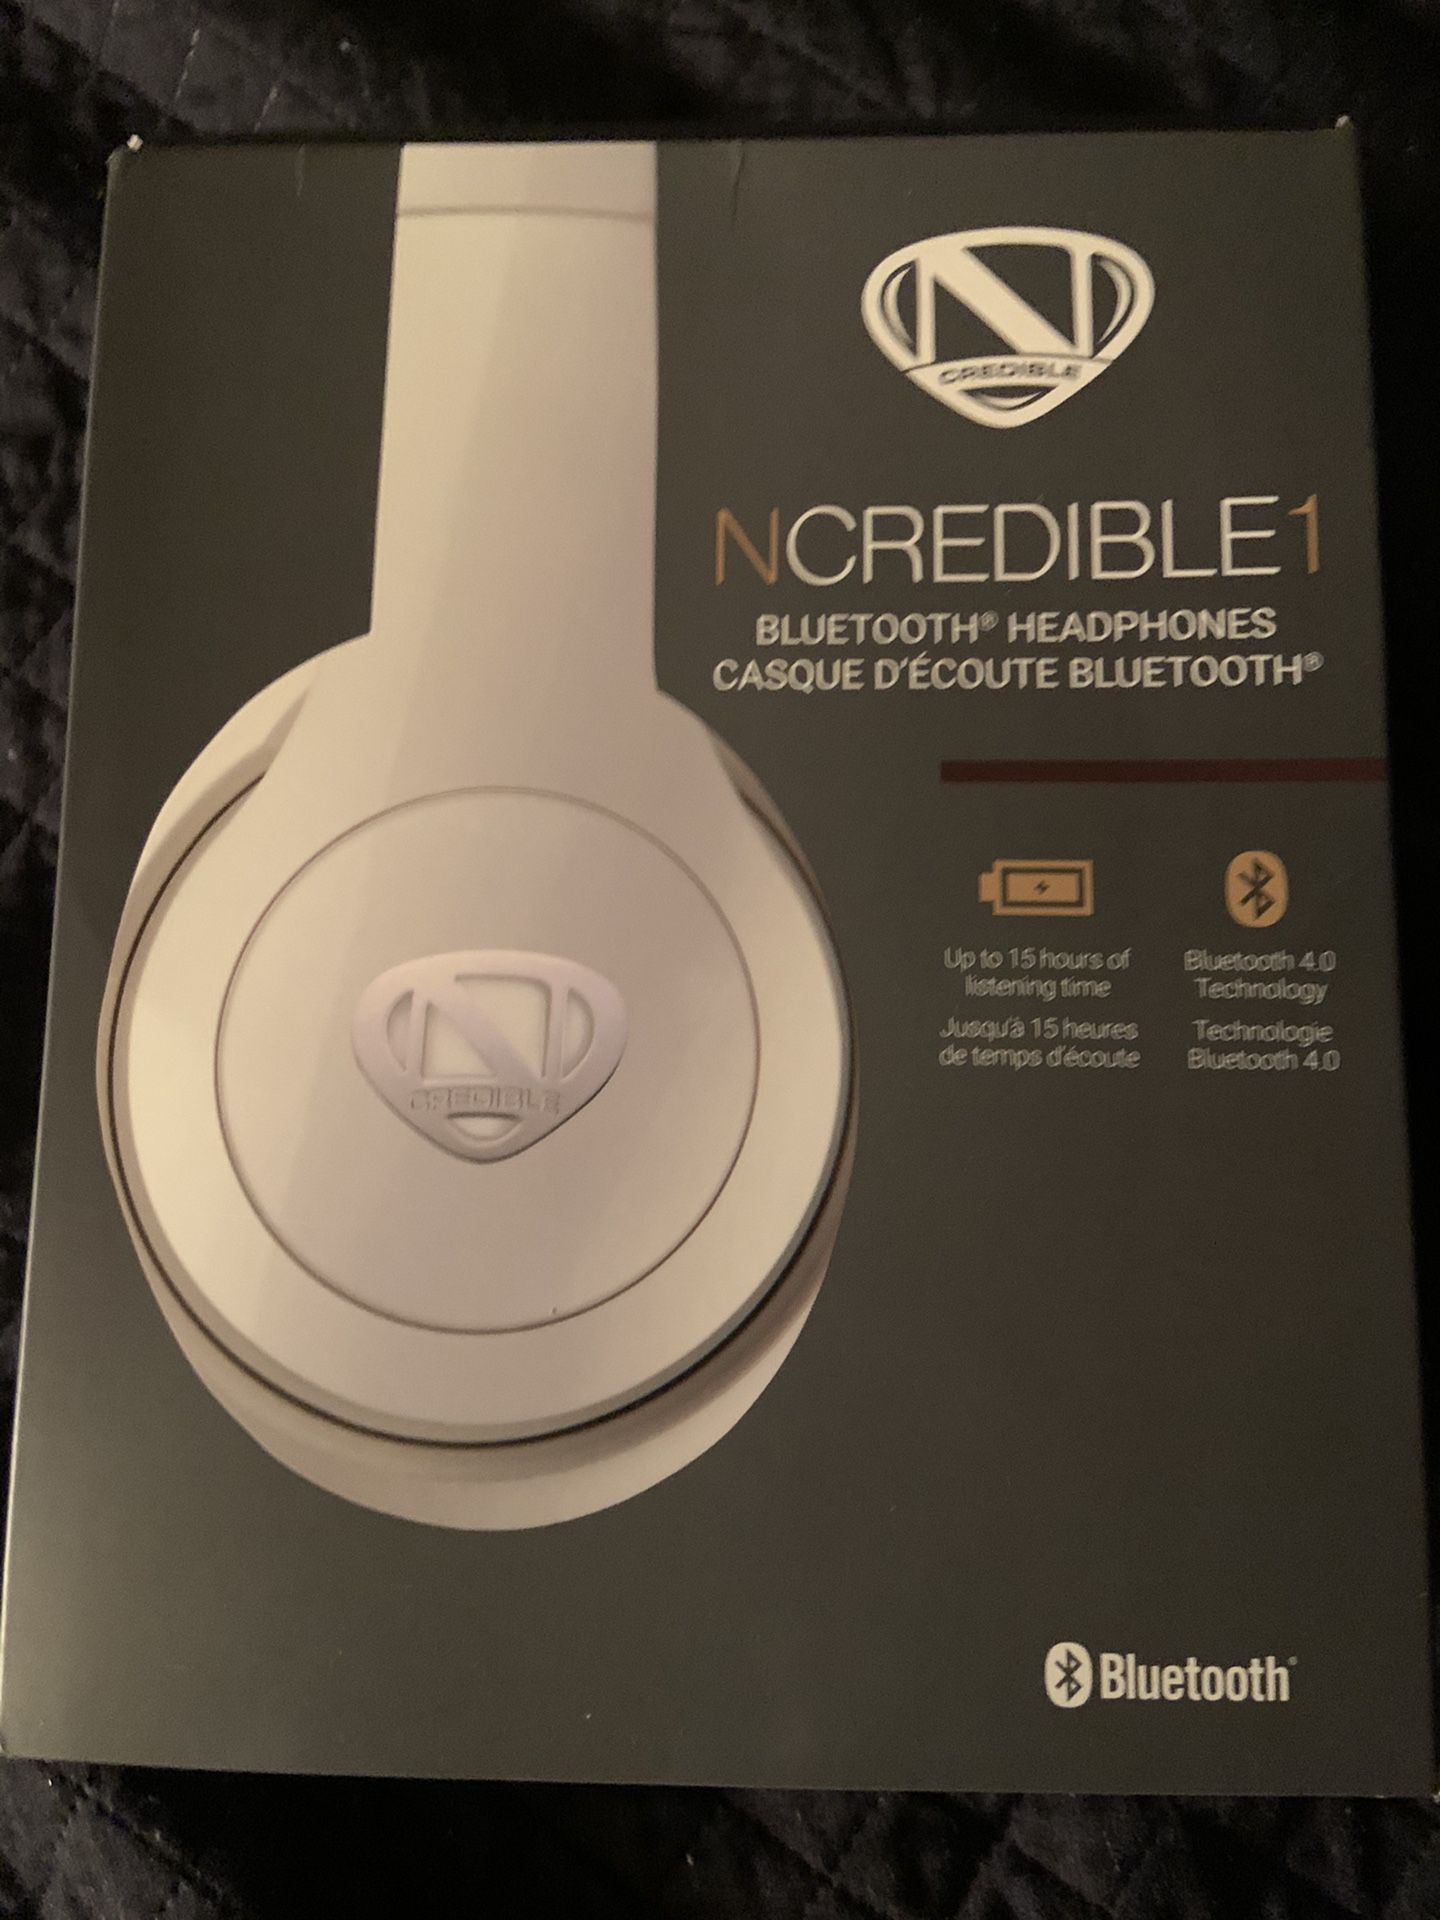 Nick cannon’s Ncredible brand wireless headphones